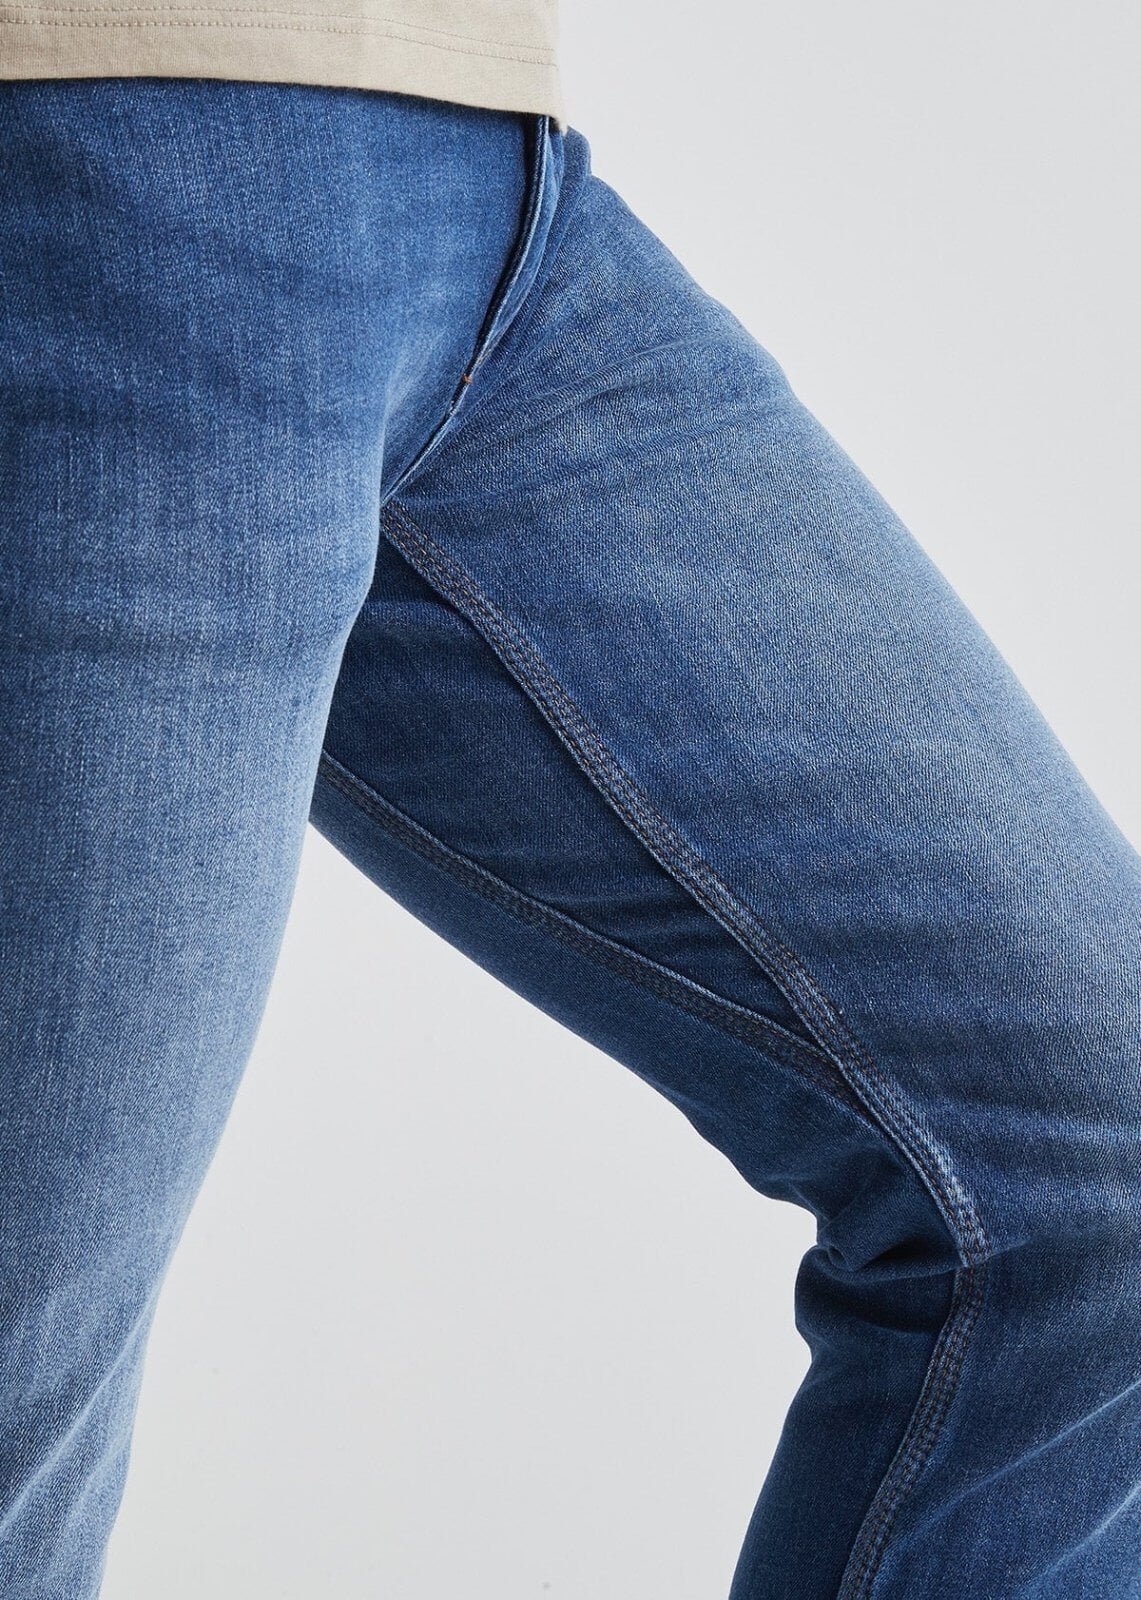 J brand selvedge blue denim jeans Tyler taper slim fit 36 